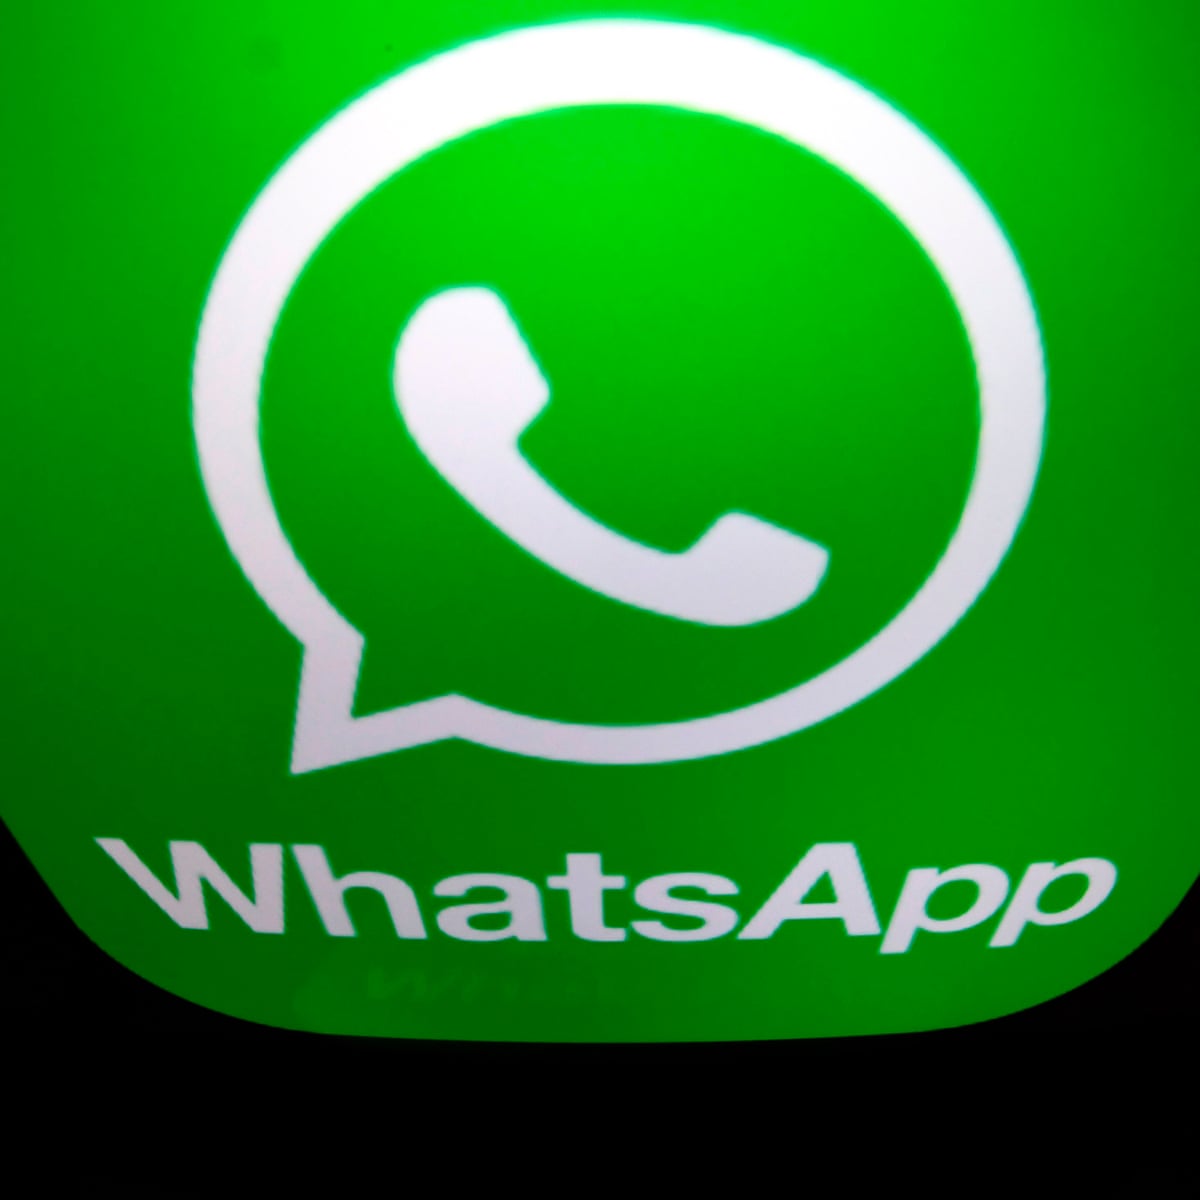 Whatsapp sex chat no